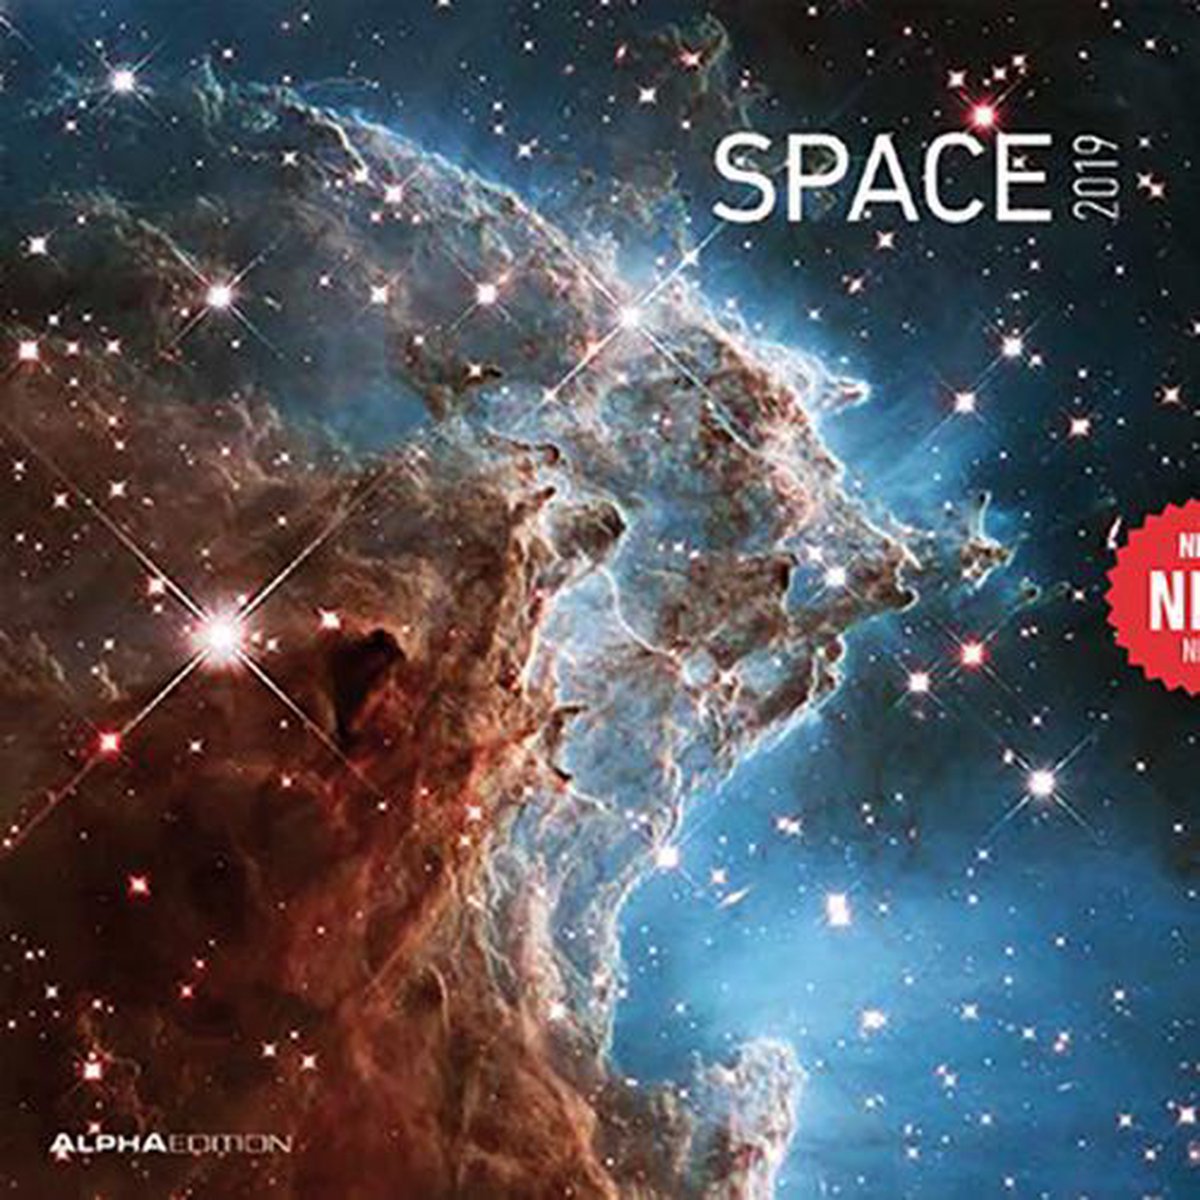 Beeldkalender 2019 - Space - Maandkalender - 6 Talig - 30x30cm - Alpha Edition